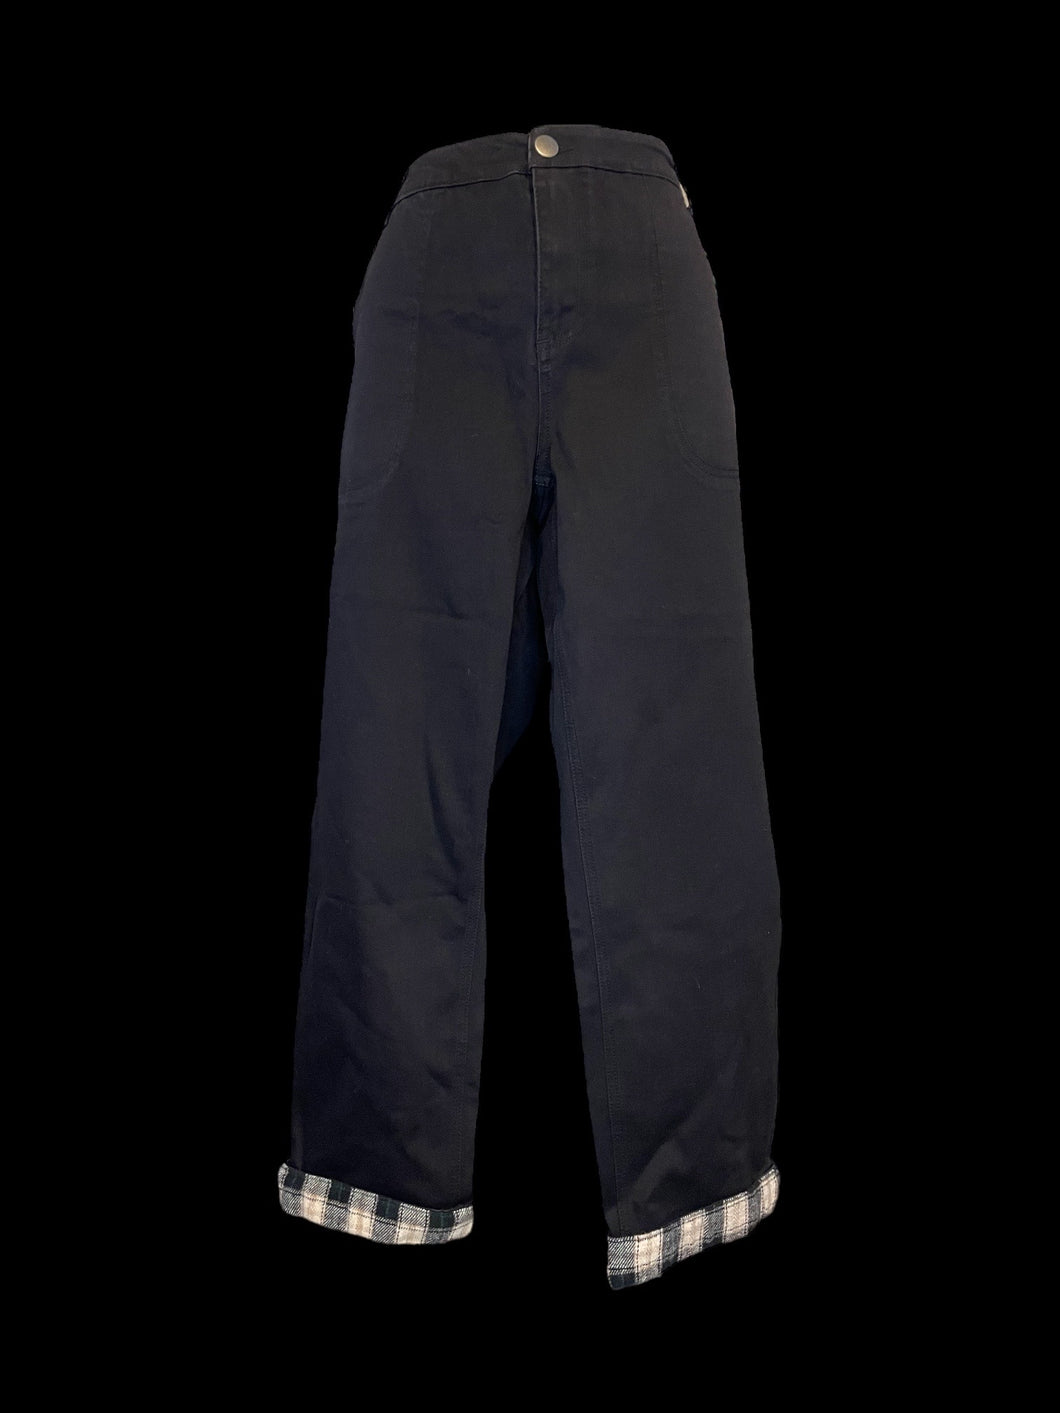 L Black high waist straight leg pants w/ beige, black, & green plaid details, pockets, belt loops, & button/zipper closure